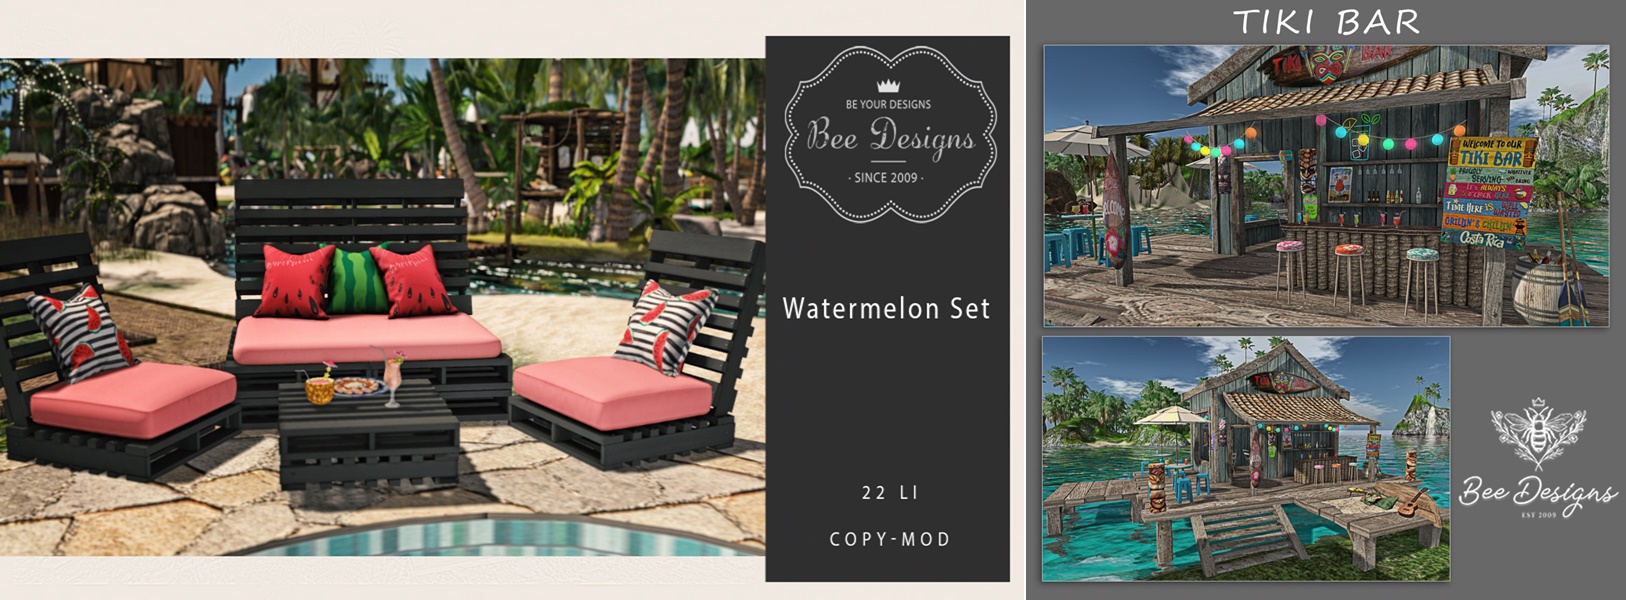 Bee Designs – Watermelon Set & Tiki Bar